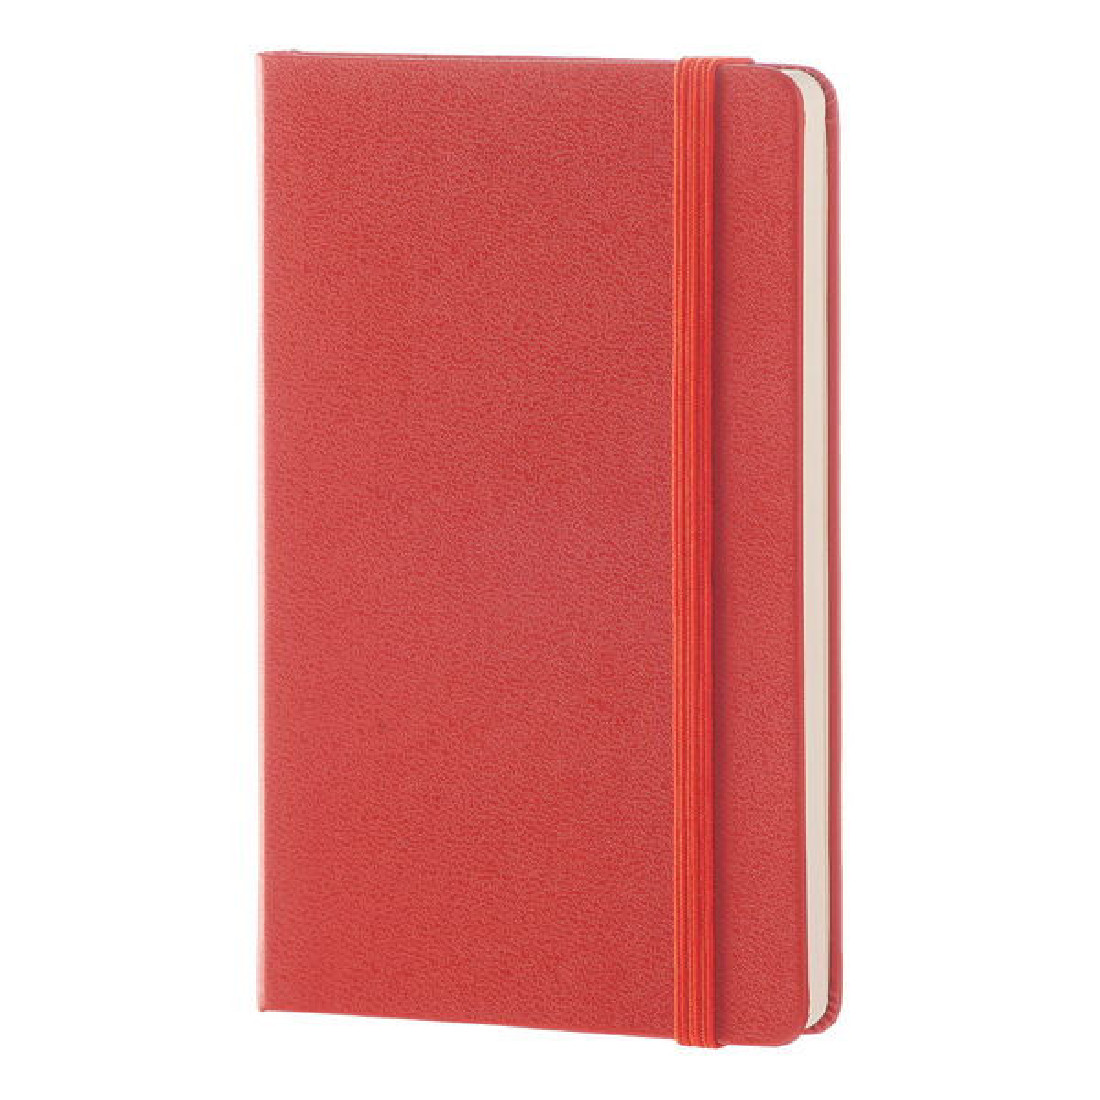 Notebook Pocket 9x14 Plain Coral Orange Hard Cover Moleskine